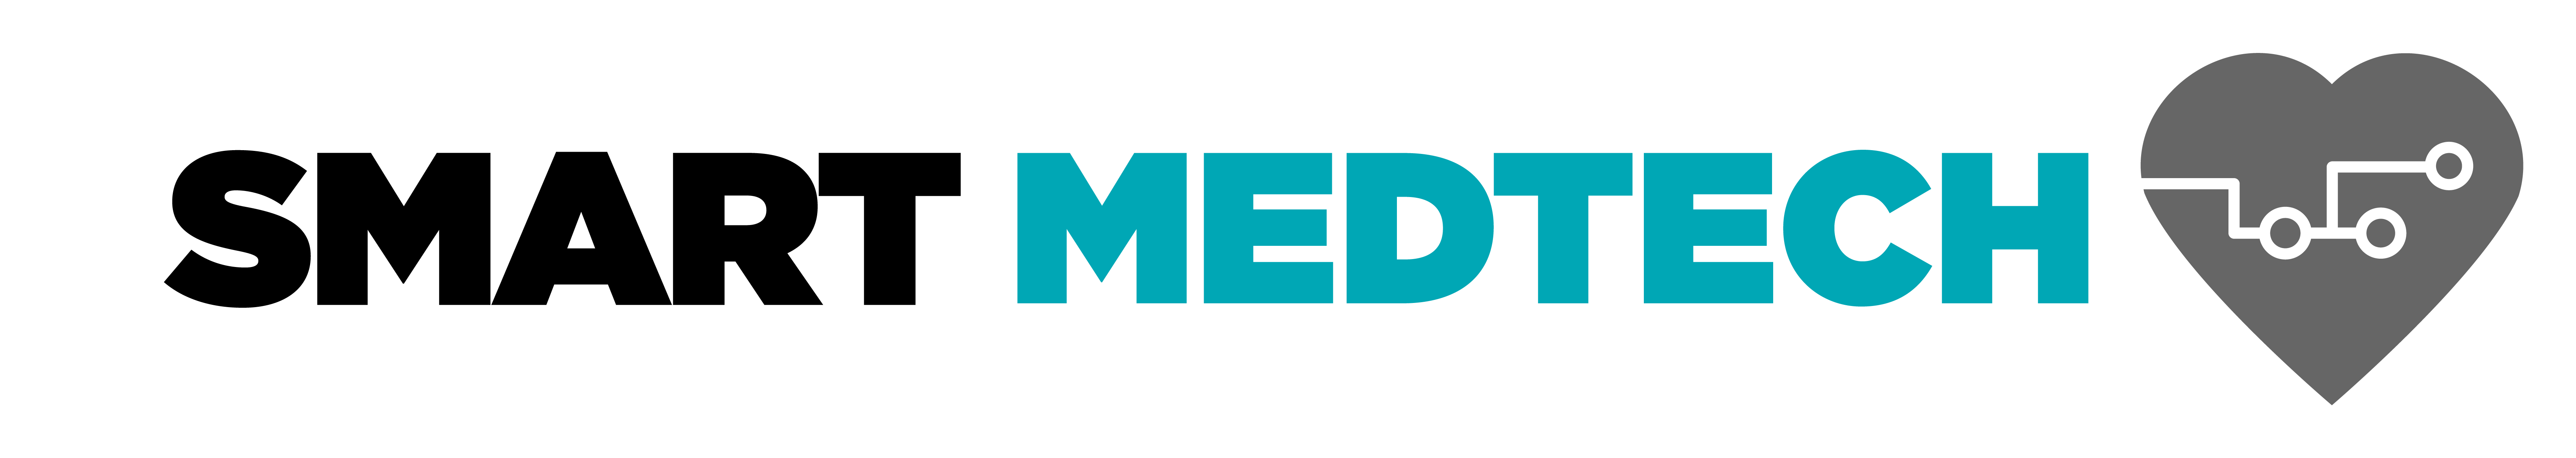 Smart Medtech new logo